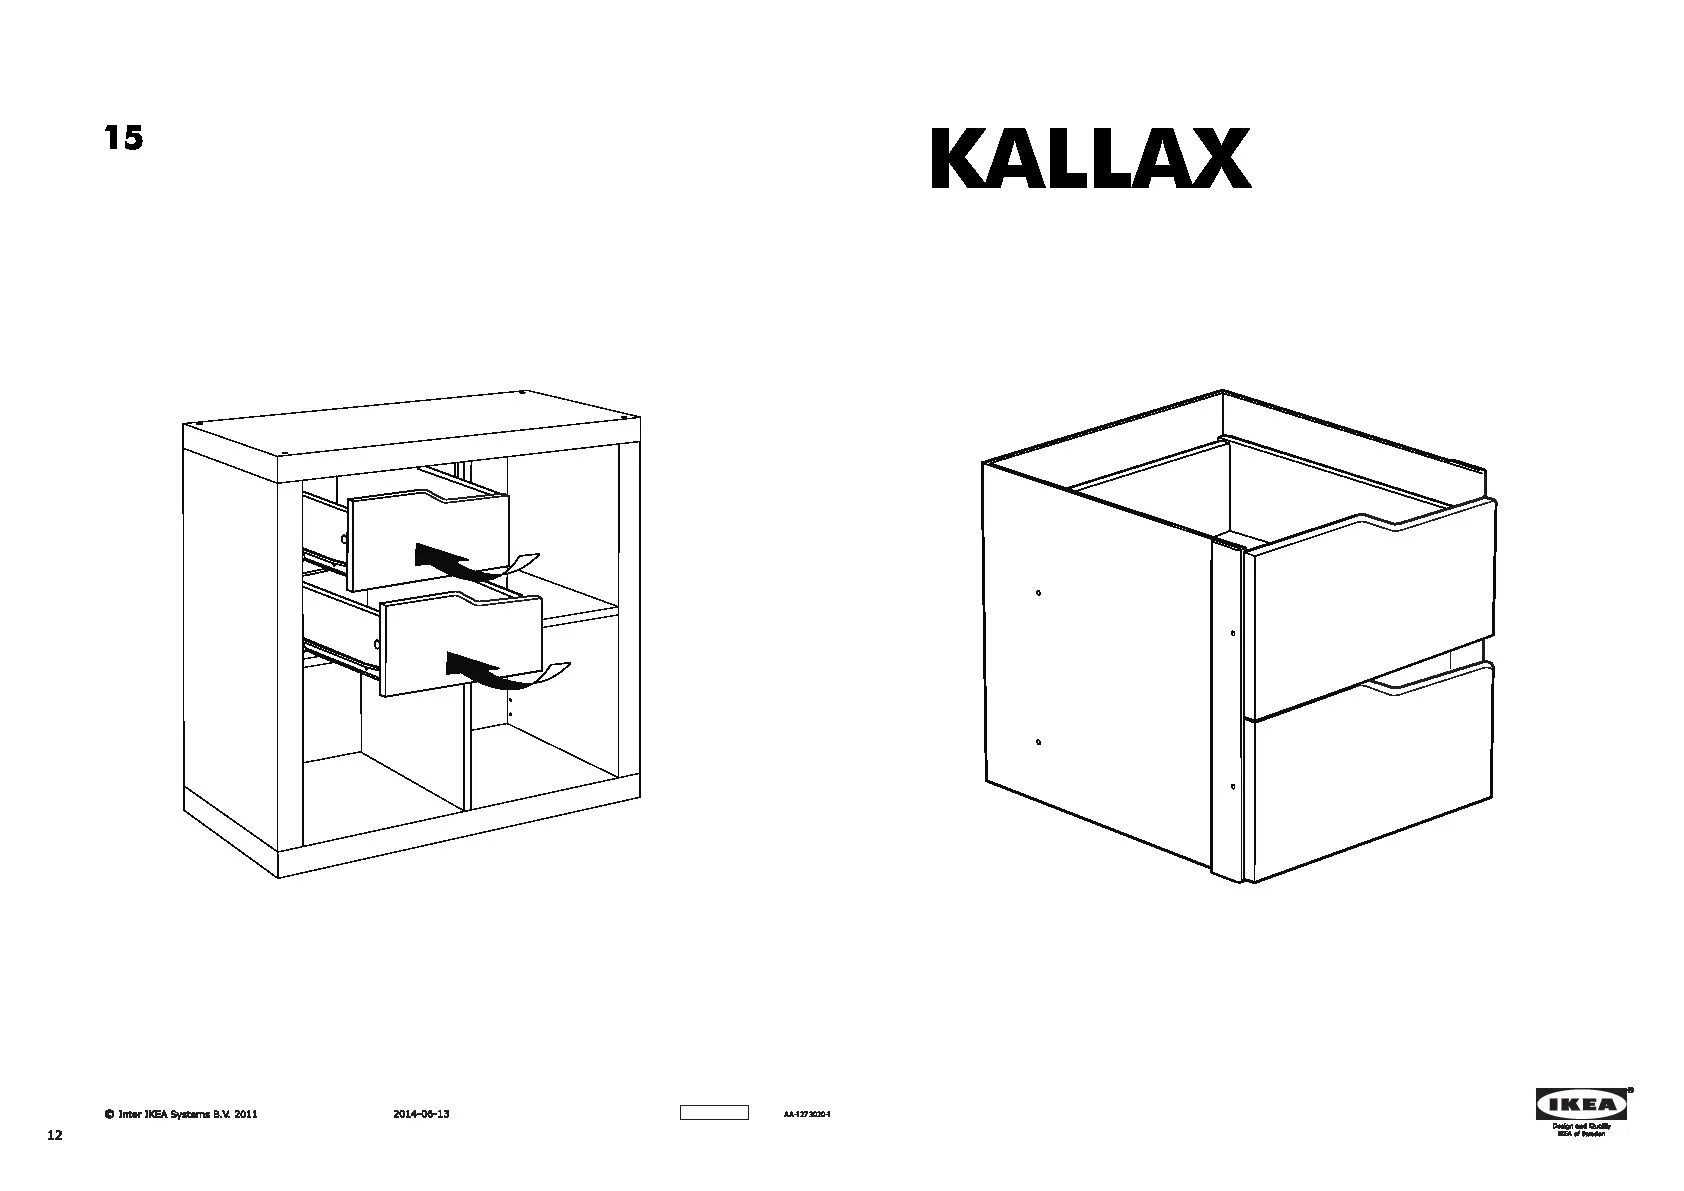 Схема сборки каллакс икеа. Схема сборки стеллажа икеа каллакс. Ikea Kallax инструкция. Сборка стеллажа каллакс икеа.